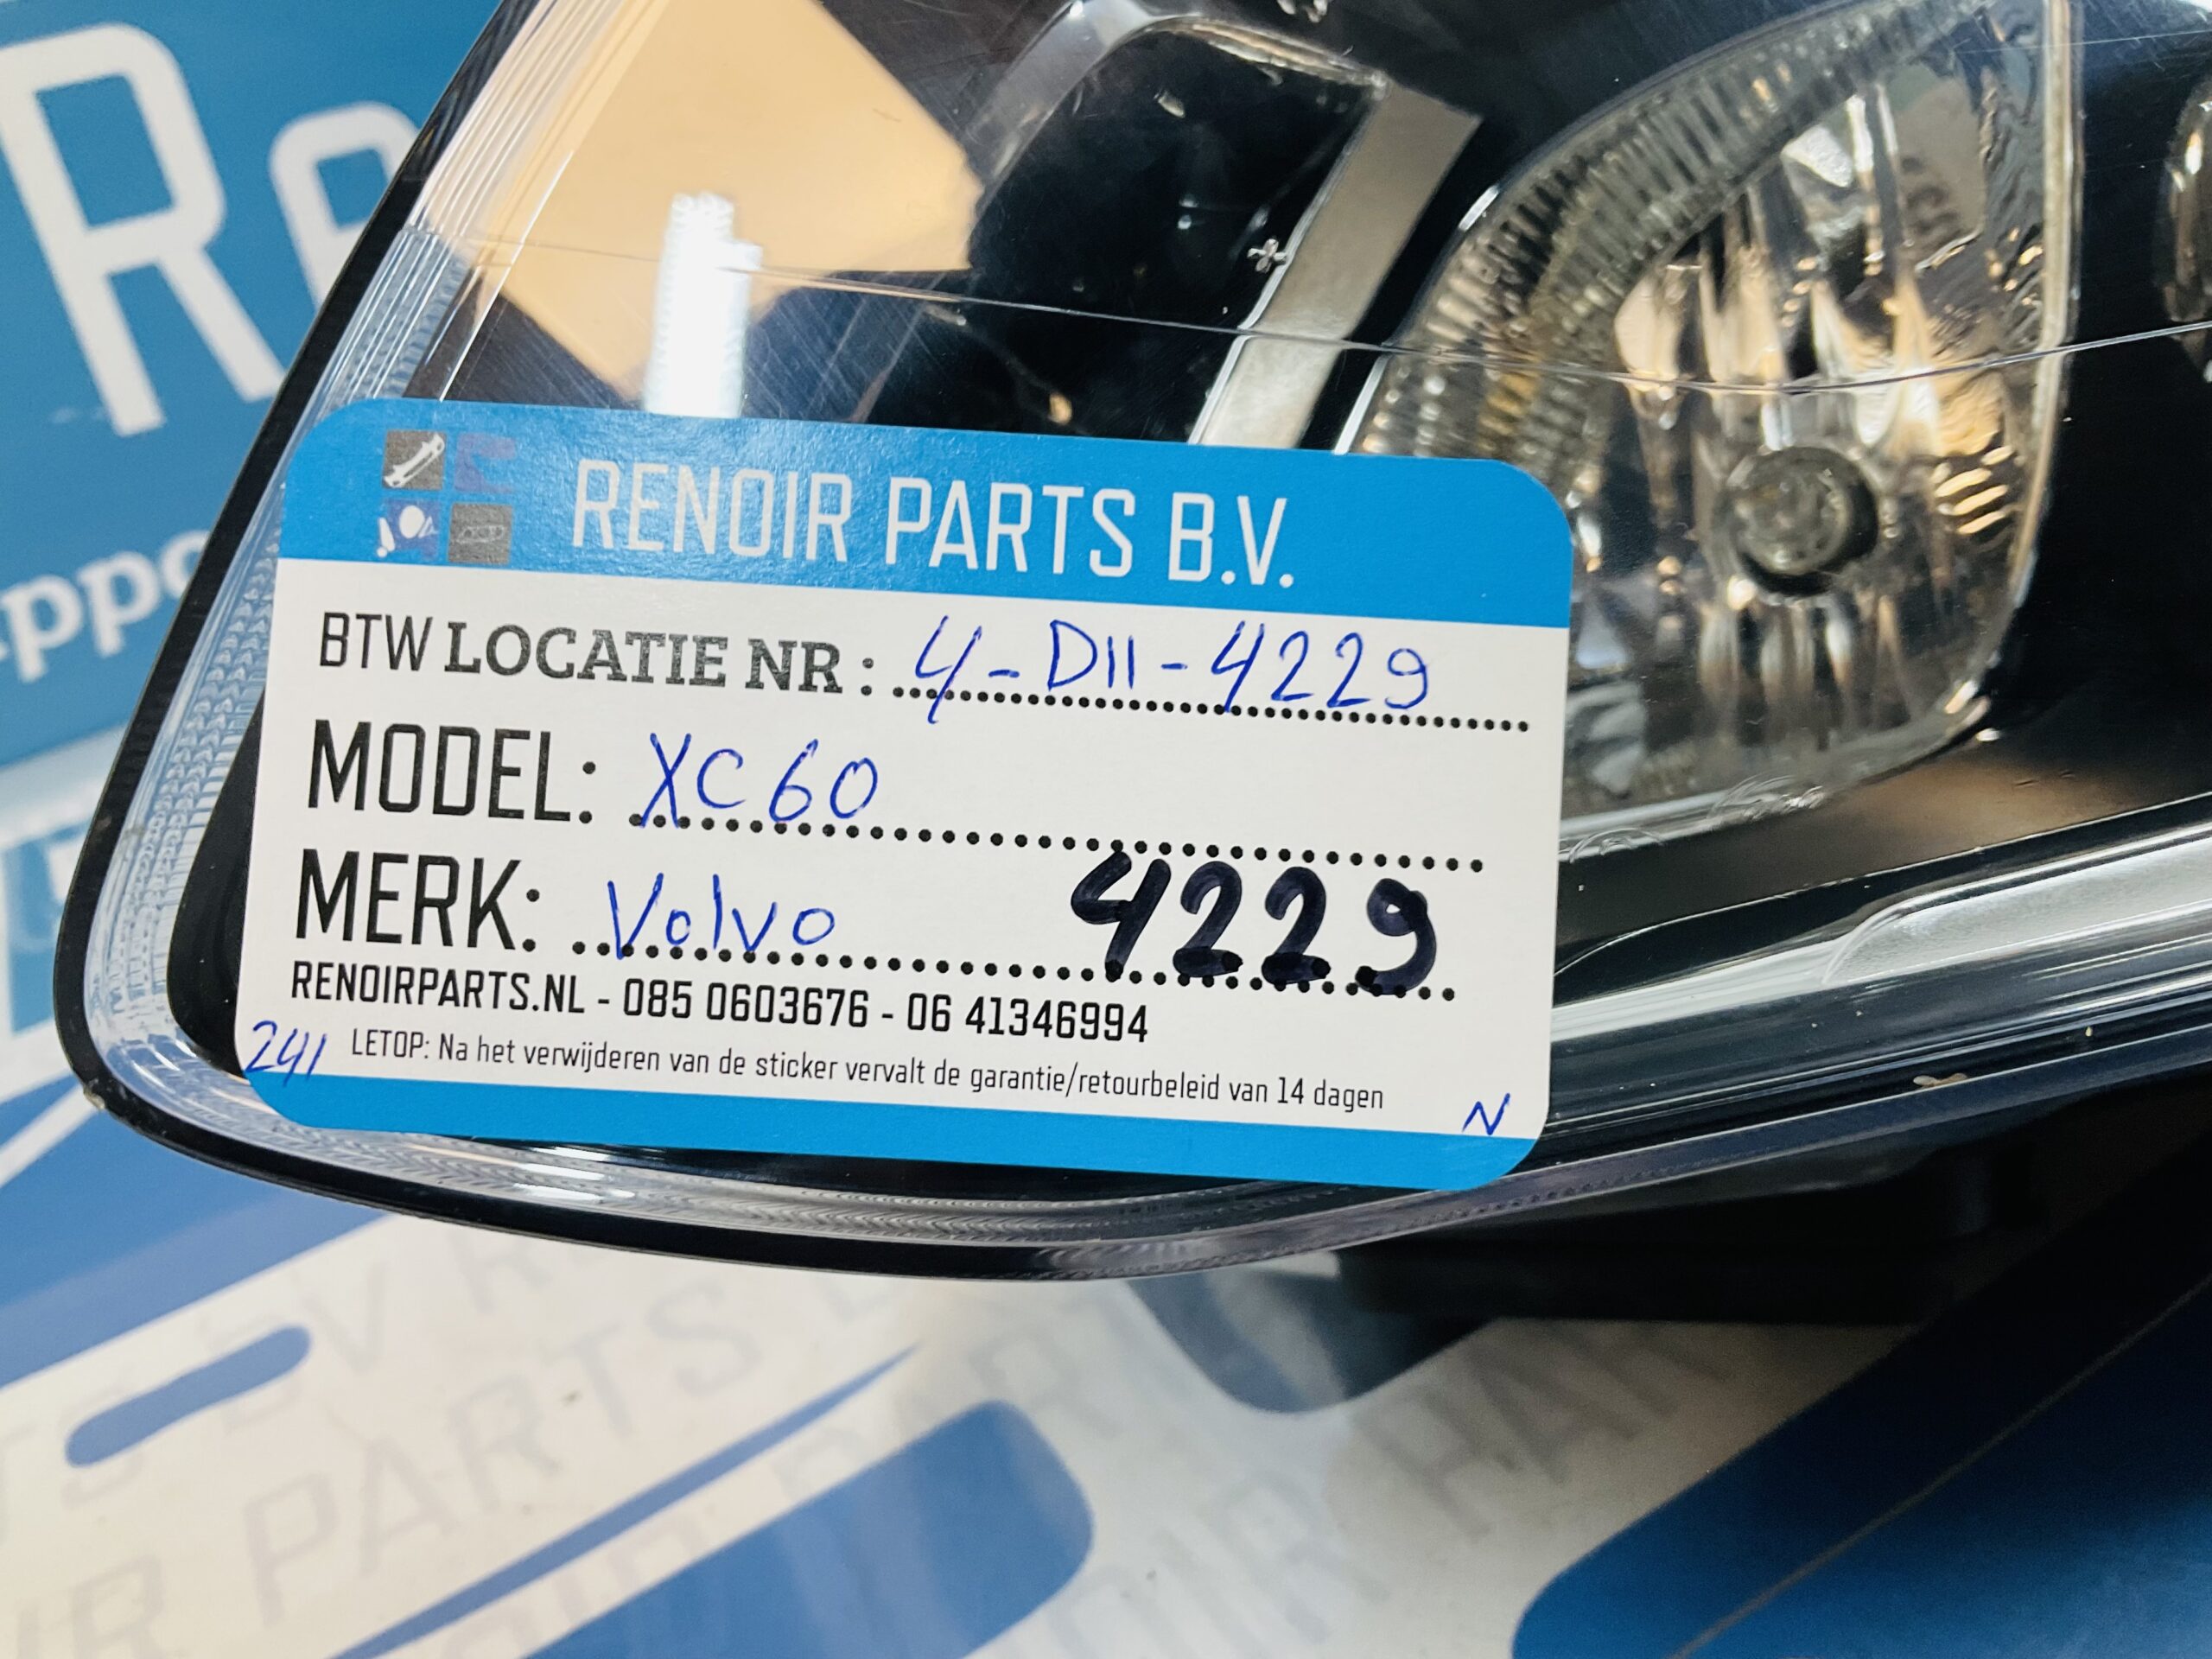 Koplamp Volvo XC60 Xenon Led 31420249 Links 4-D11-4229N - Renoir Parts